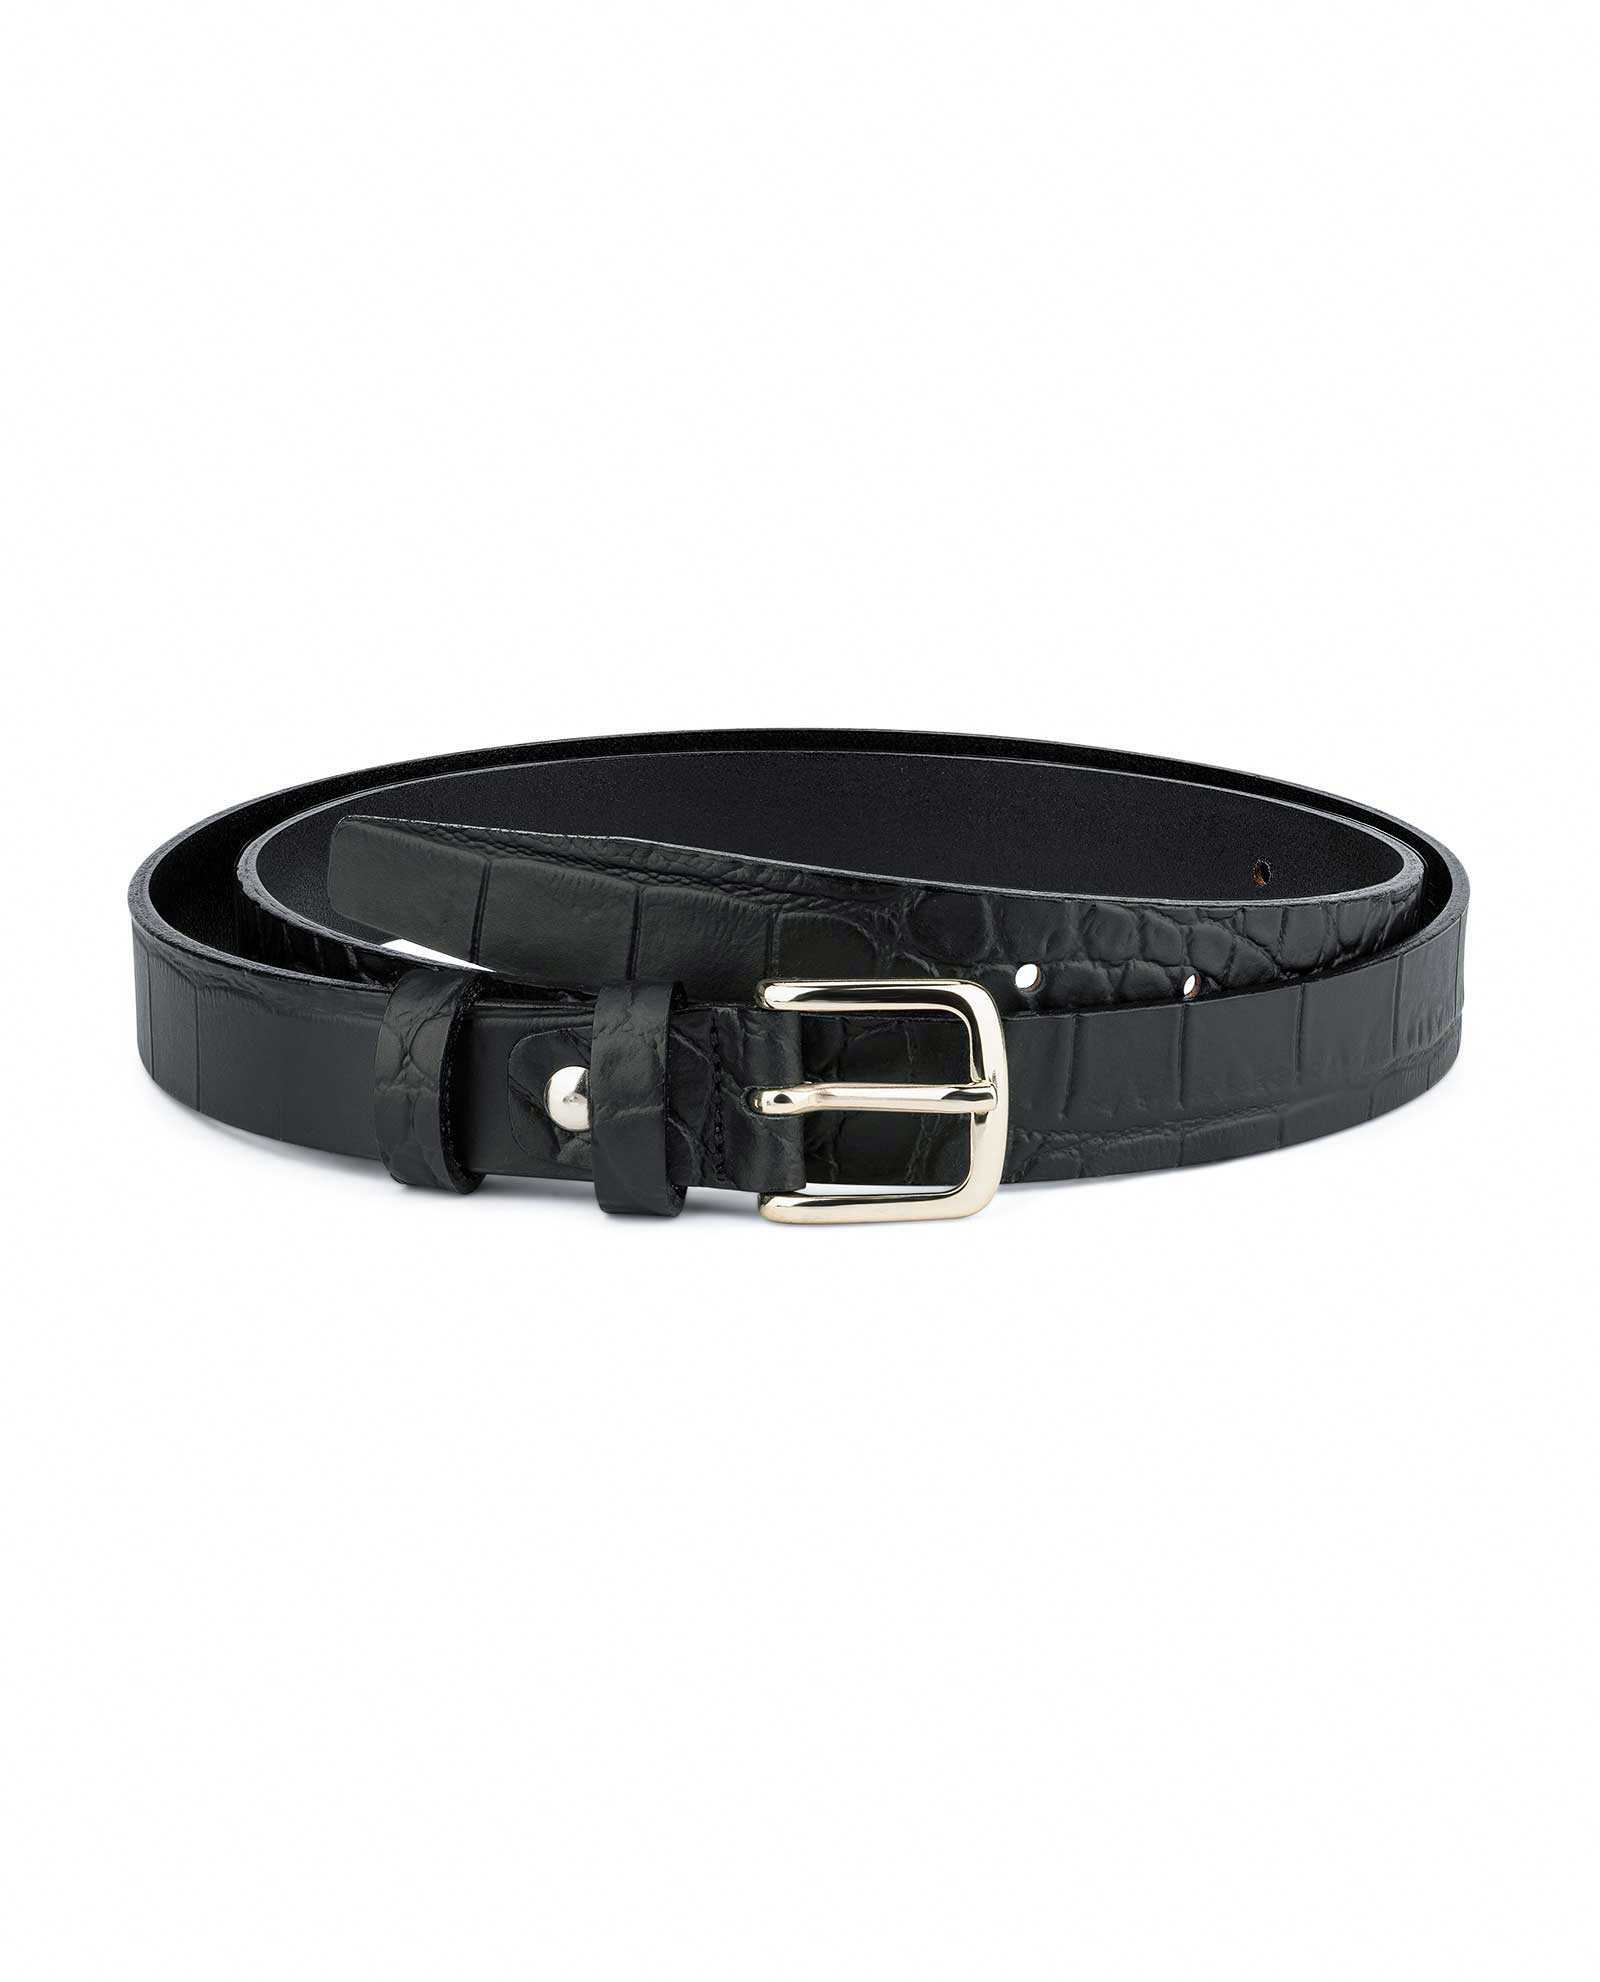 1 inch Mens Leather Belt Black croco embossed 100% Genuine Thin belts ...